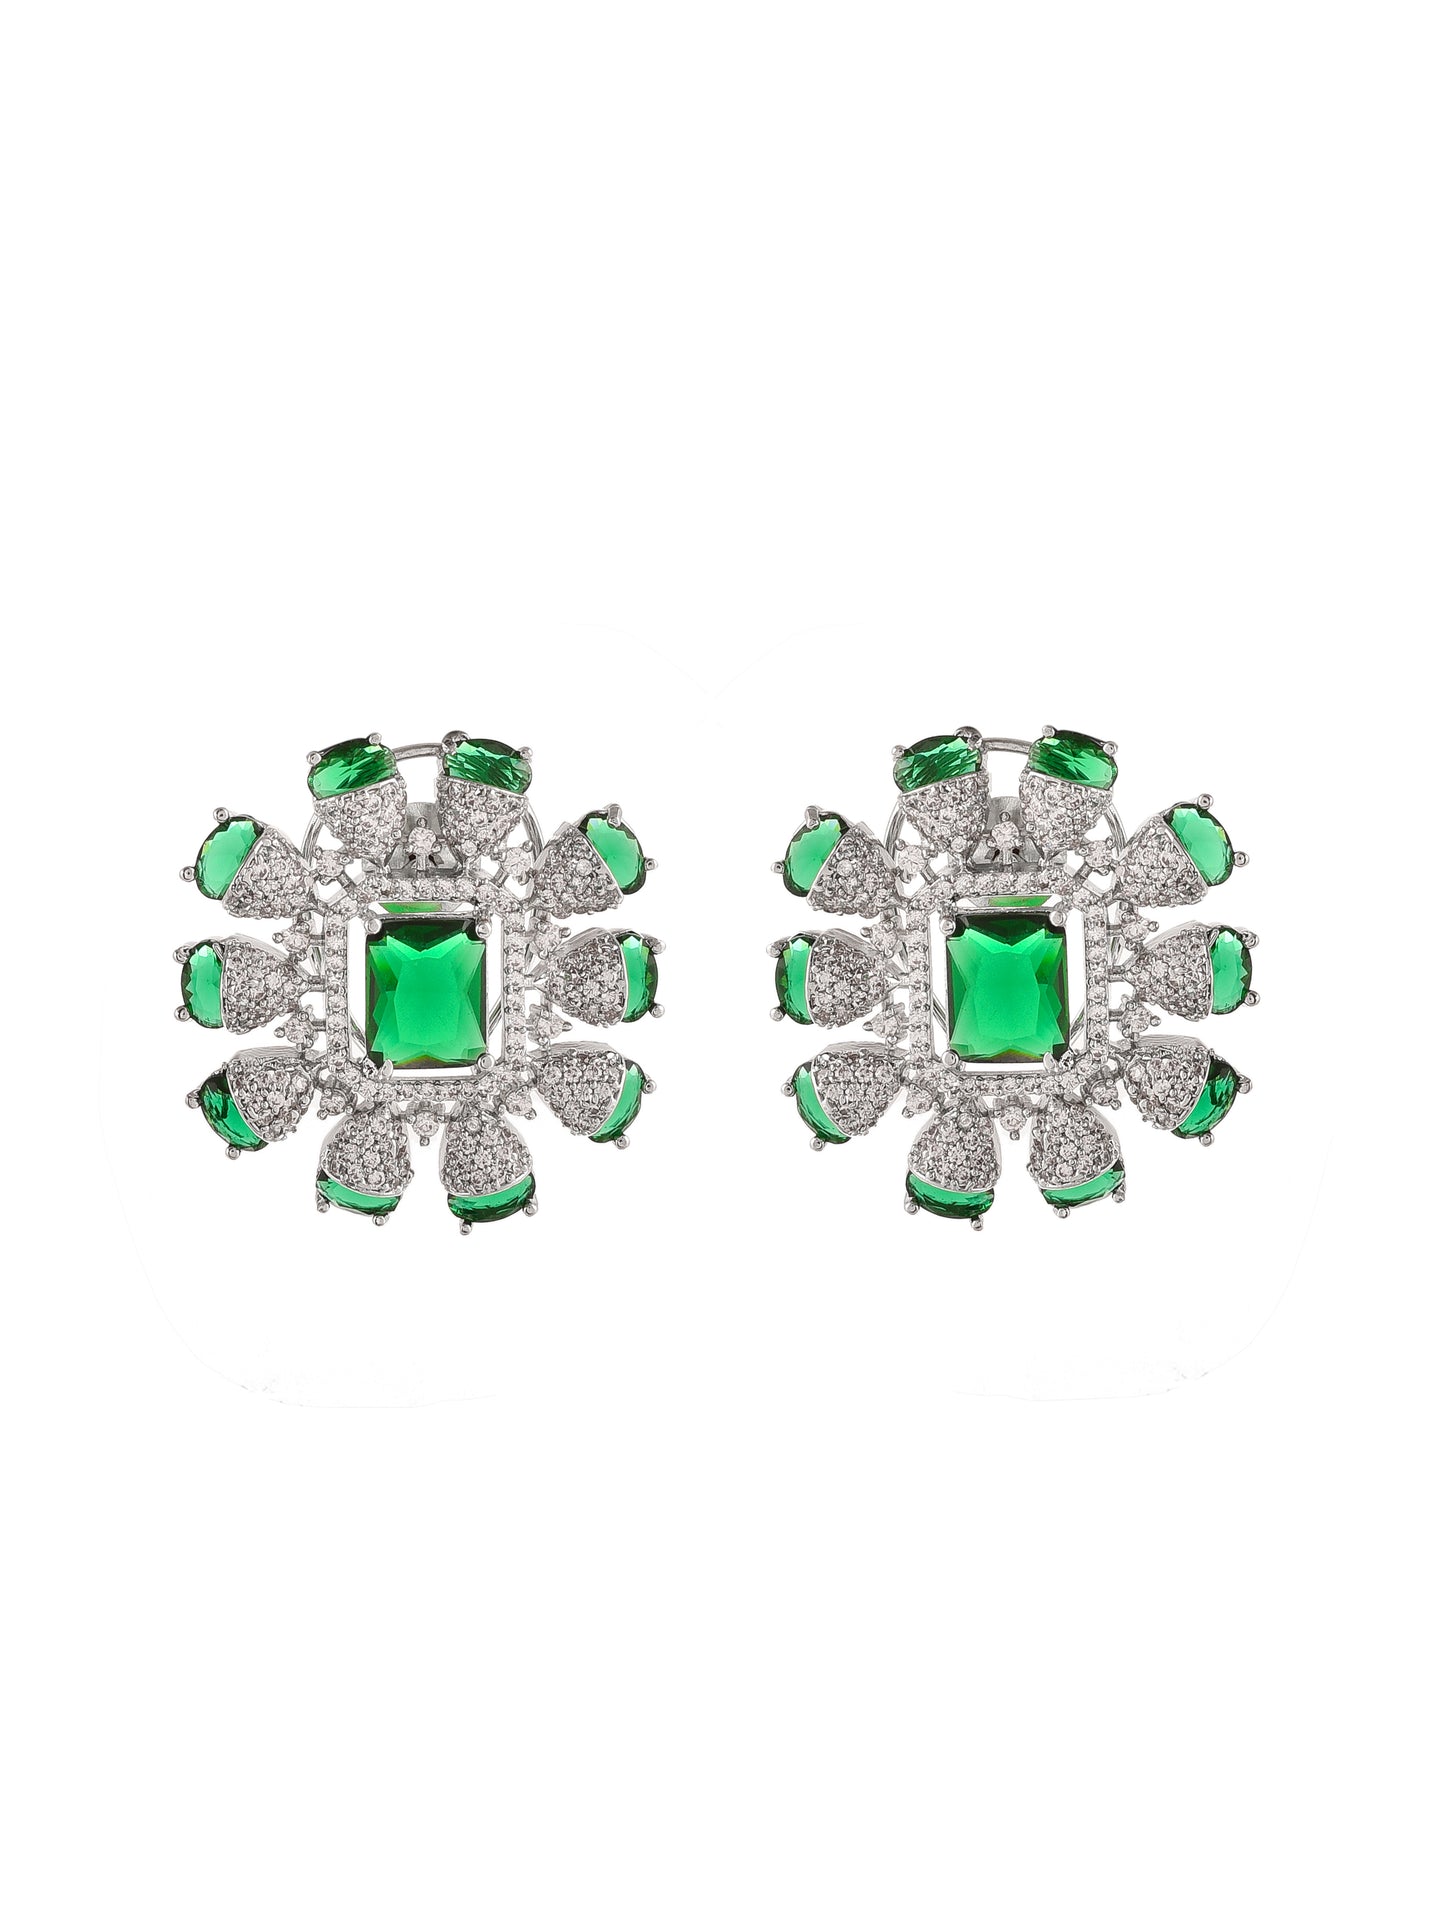 Kiara Advani Emerald American Diamond full bridal Jewellery set with Maangtika